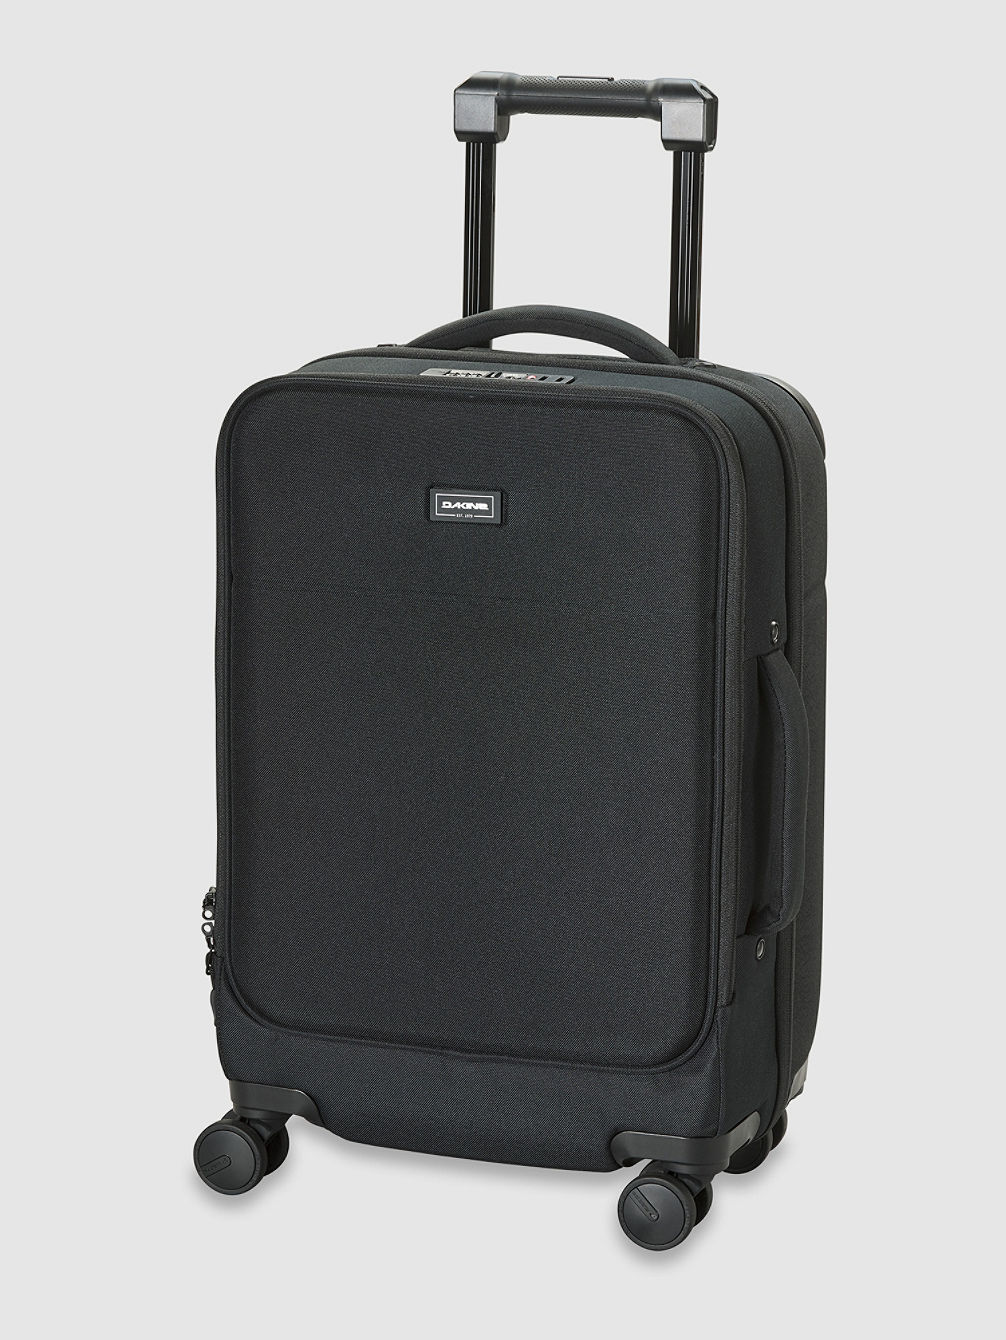 Verge Carry On Spinner 30L Travel Bag